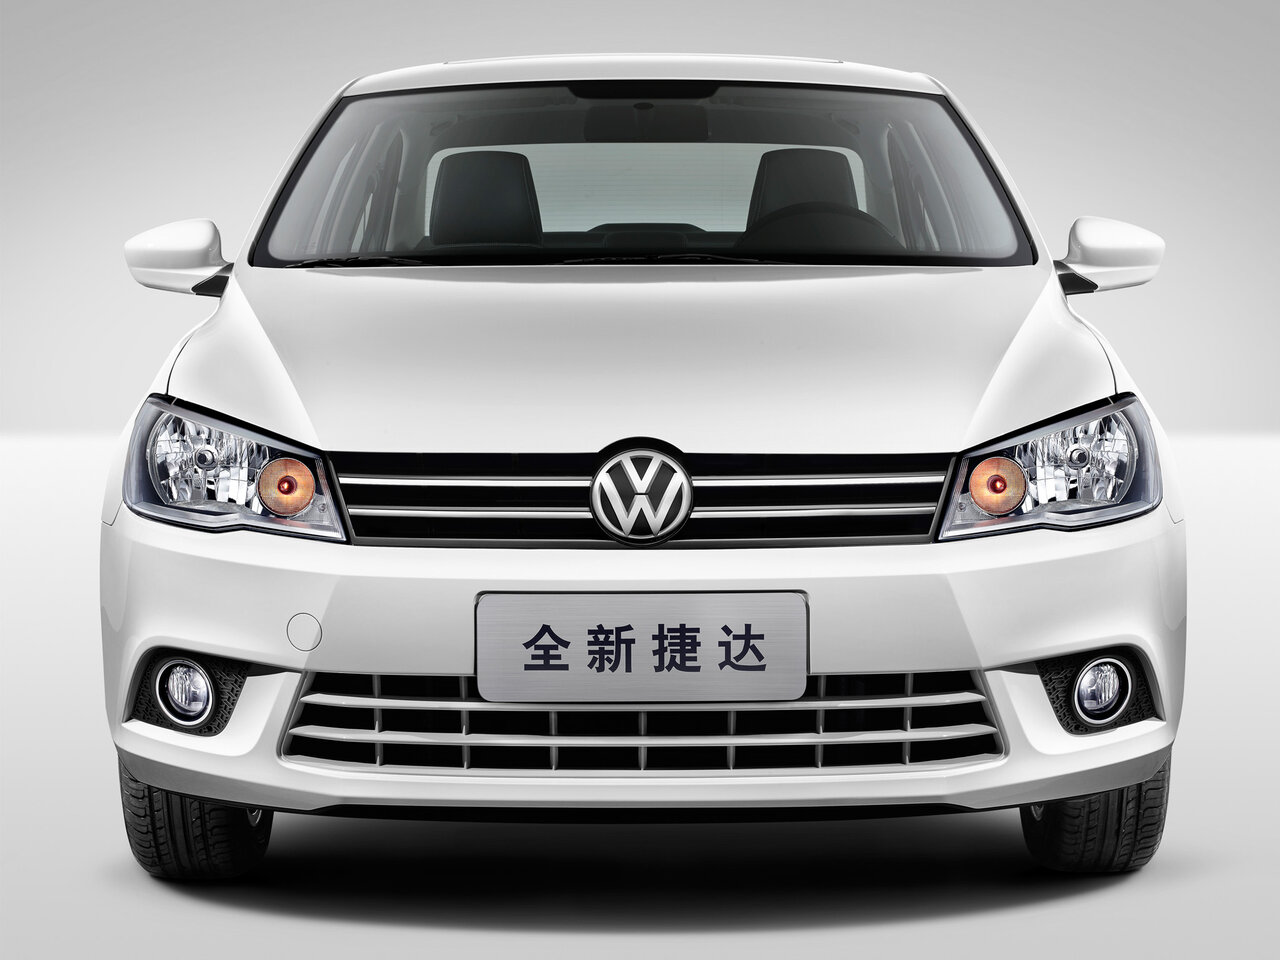 Фото Volkswagen Jetta II (China Market) (China Market)